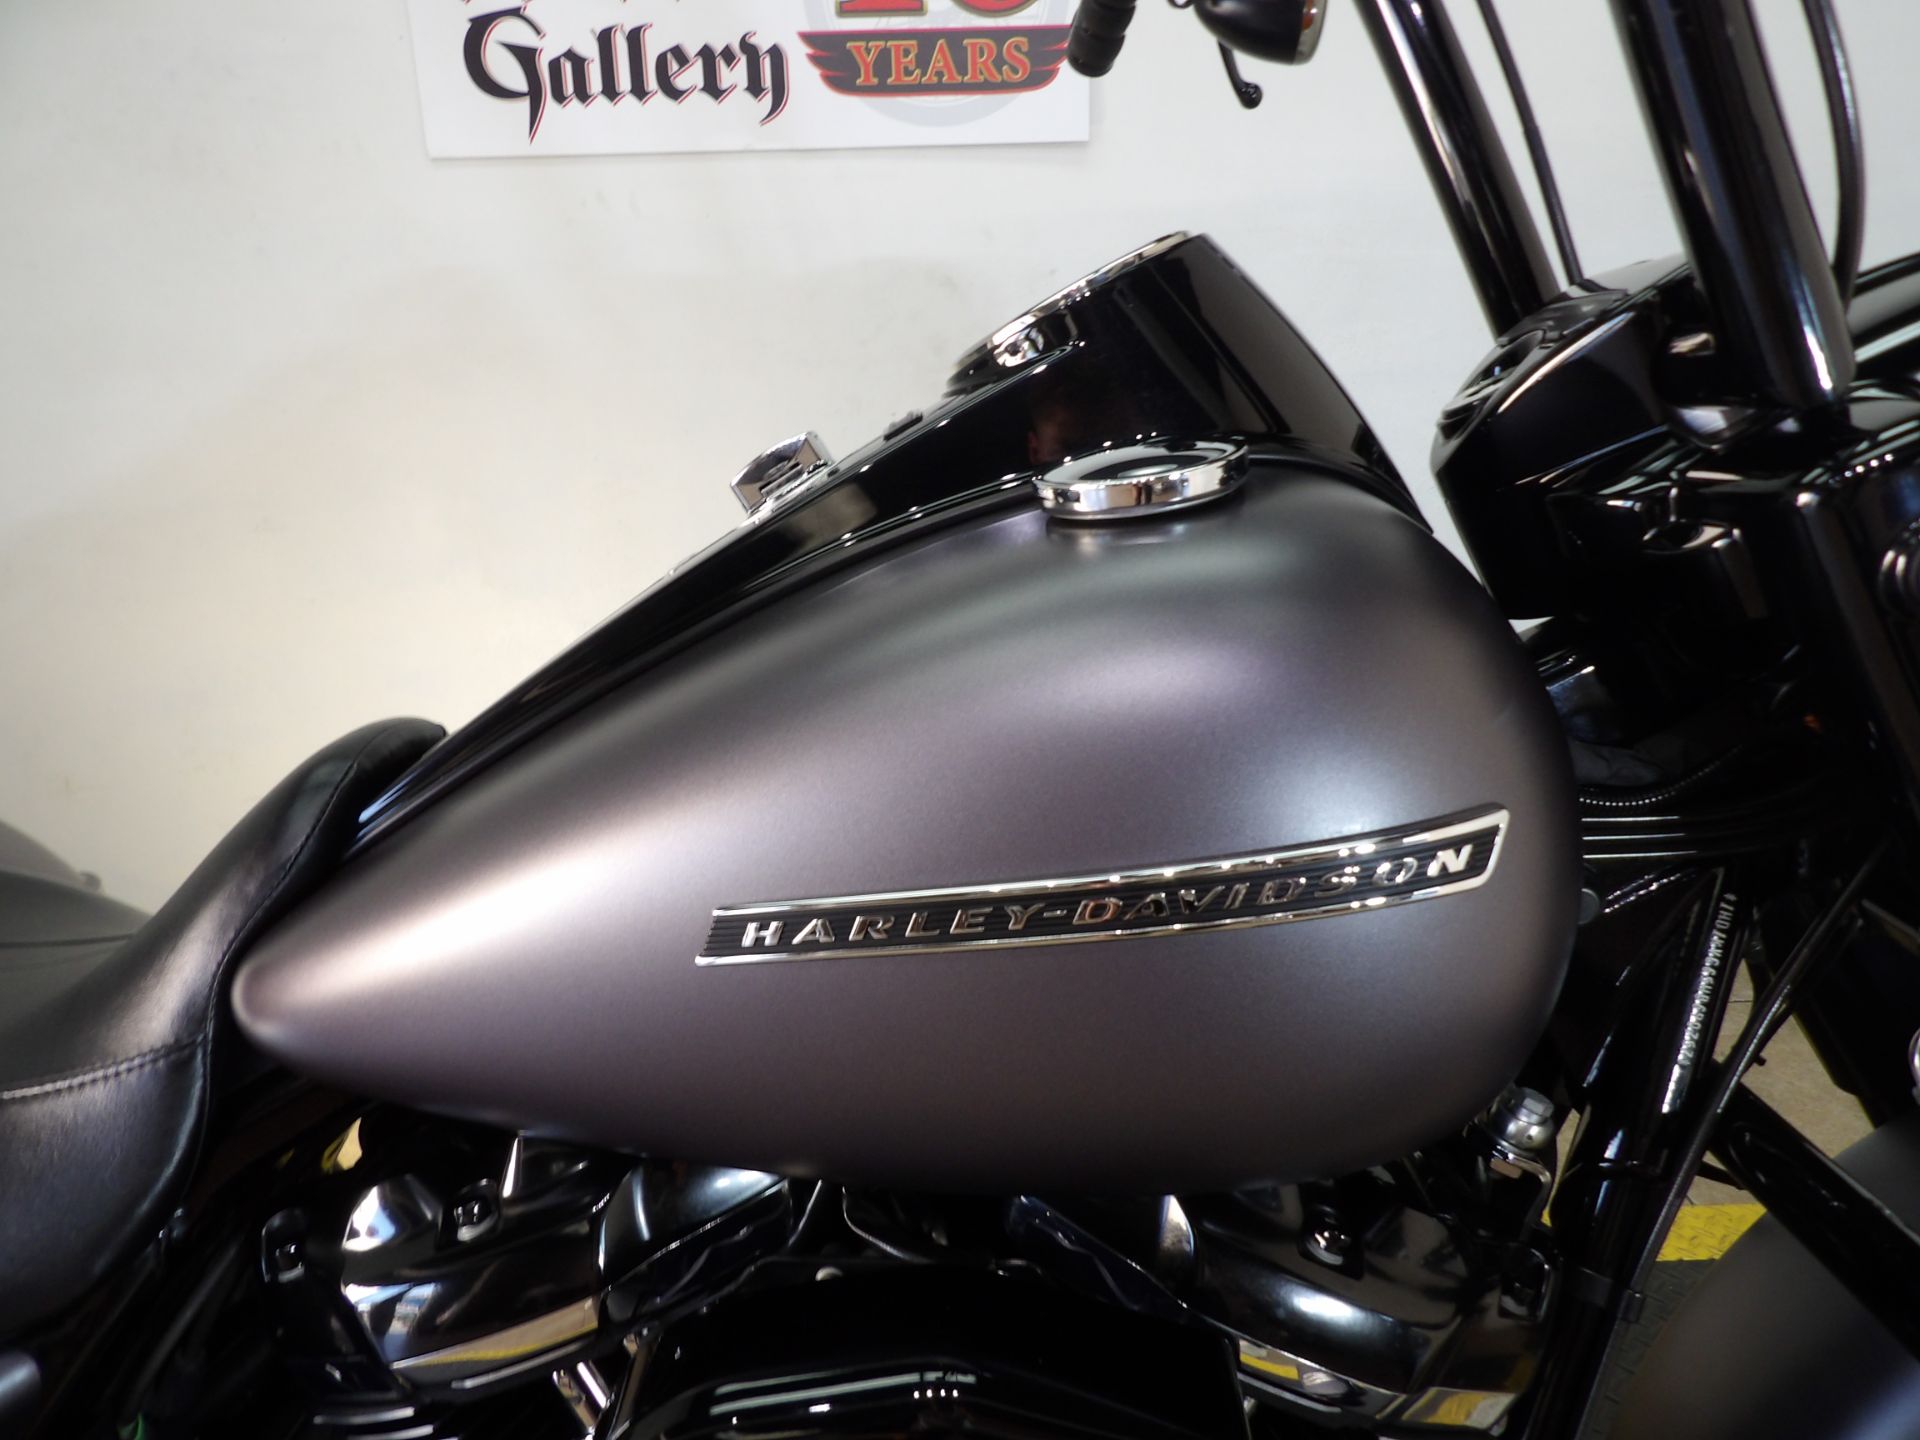 2017 Harley-Davidson Road King® Special in Temecula, California - Photo 7